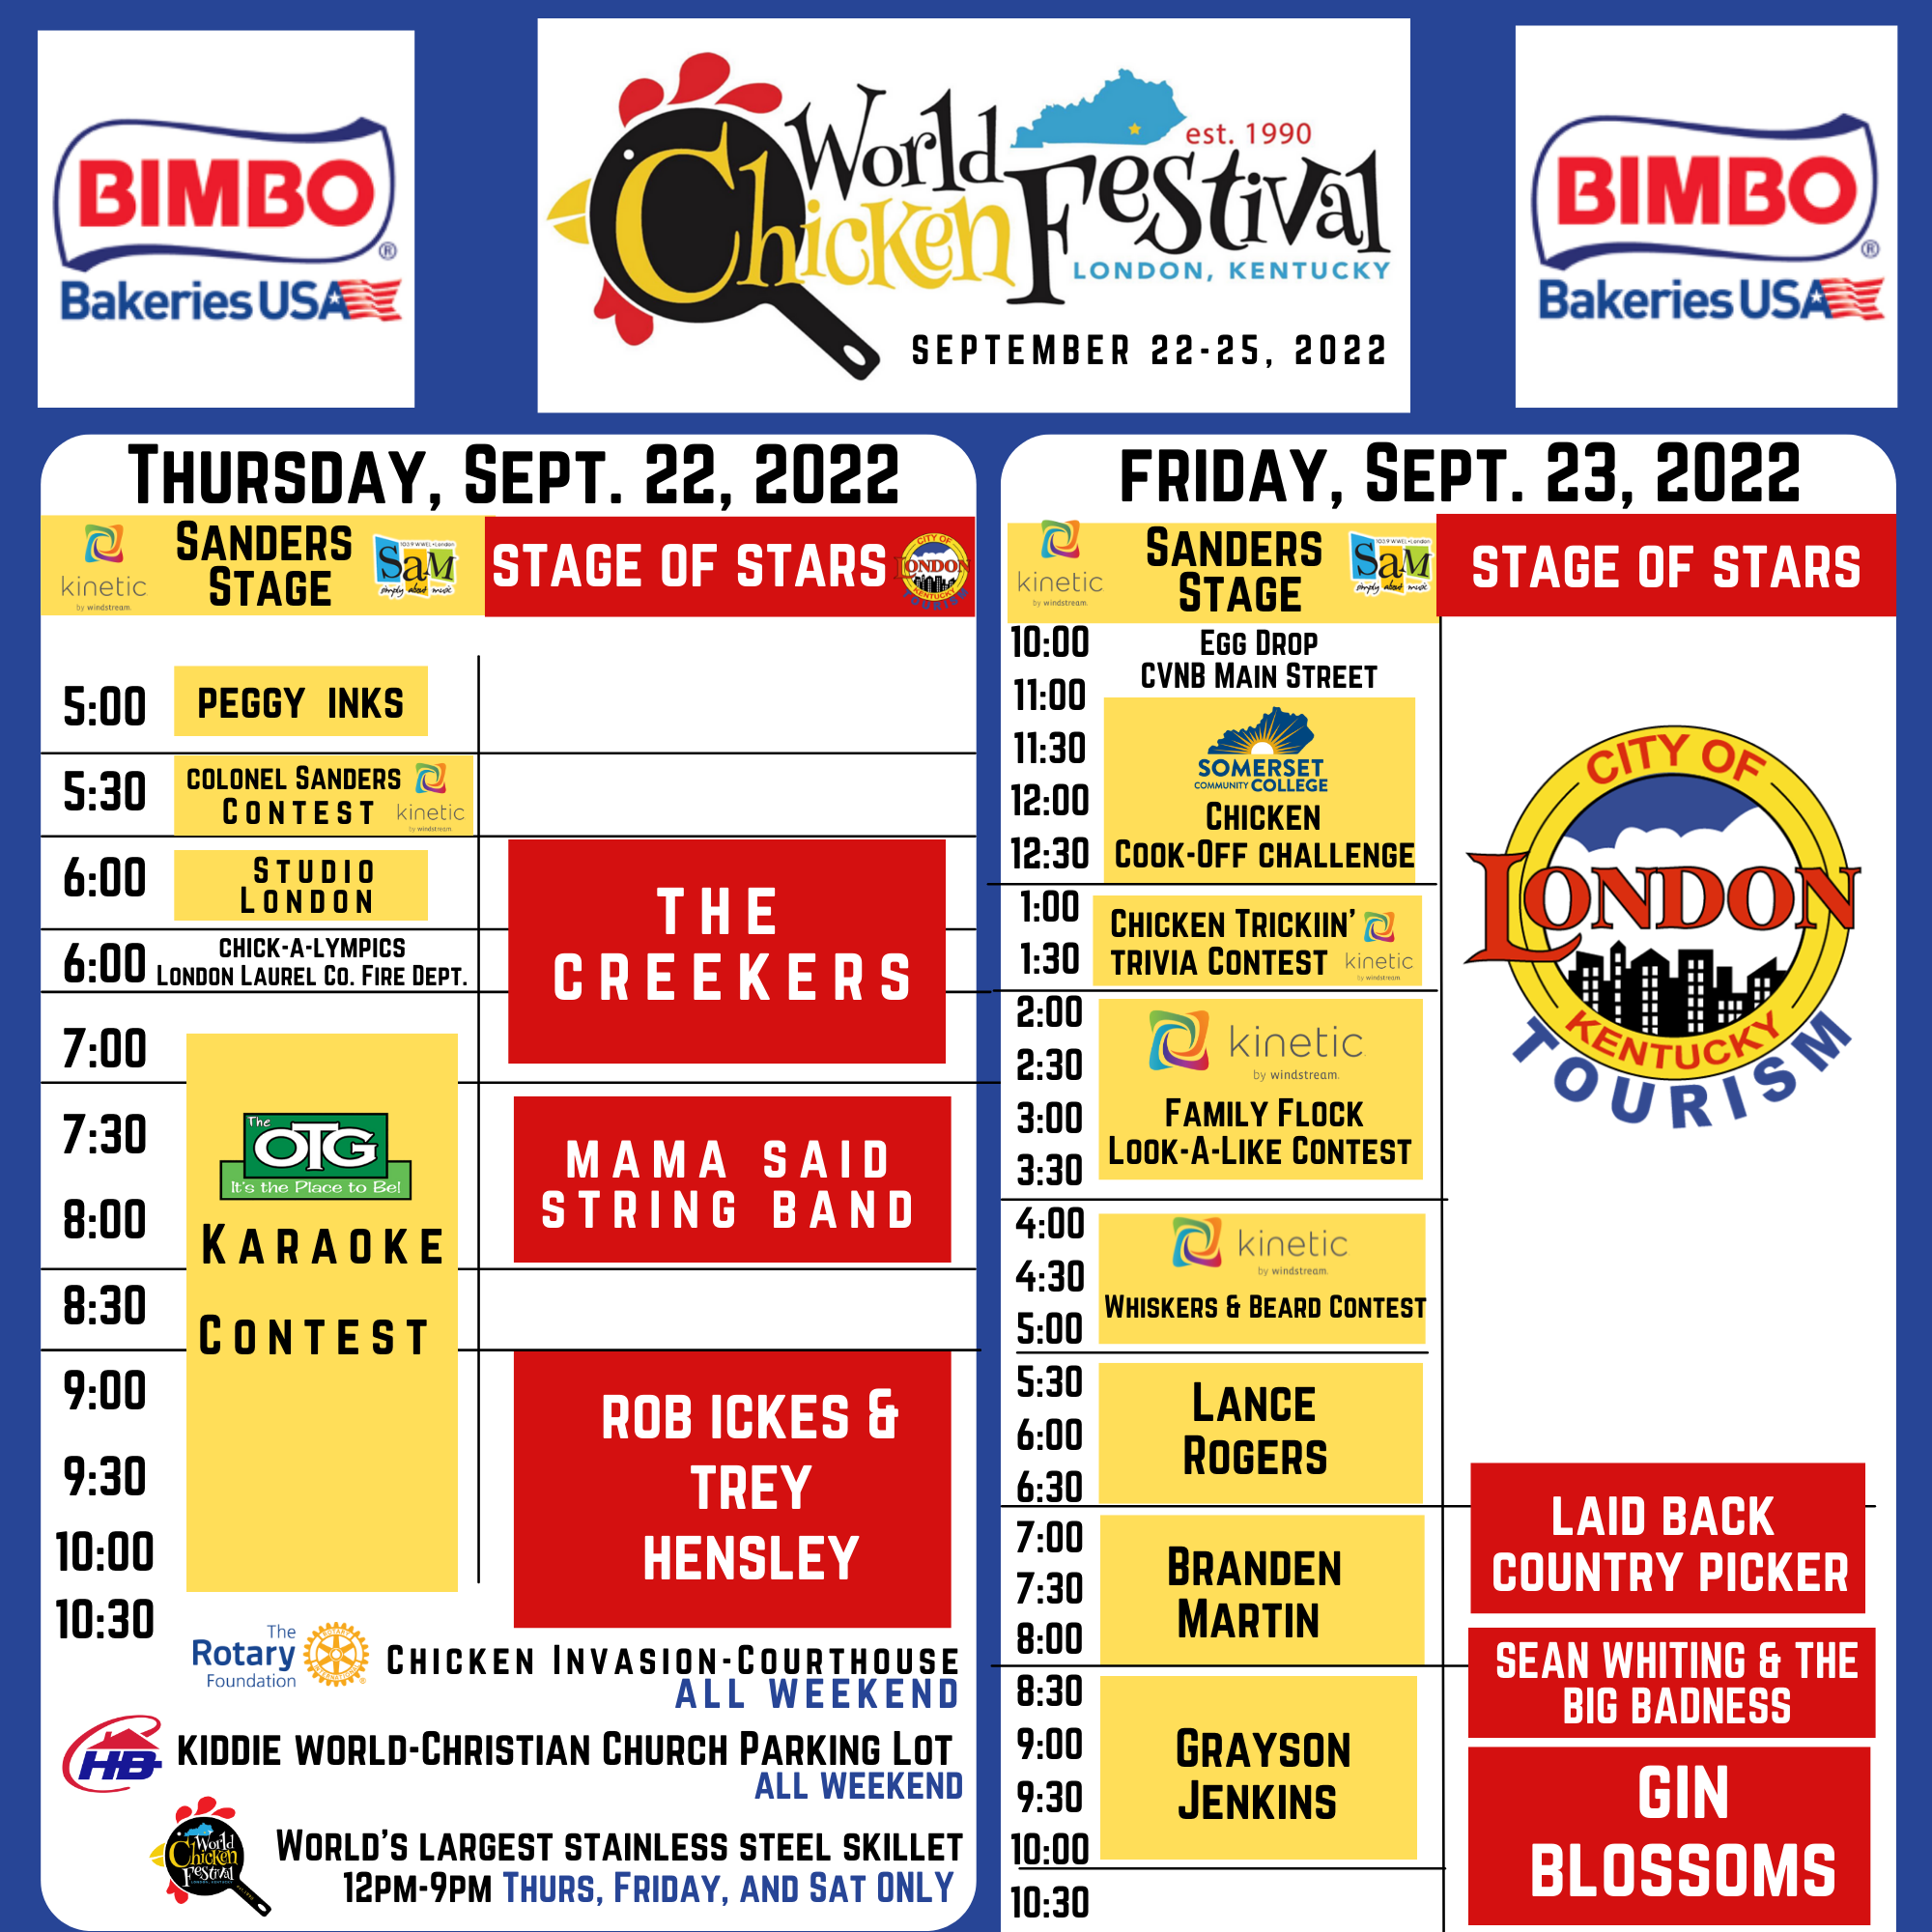 World Chicken Festival London, Kentucky Schedule at a Glance